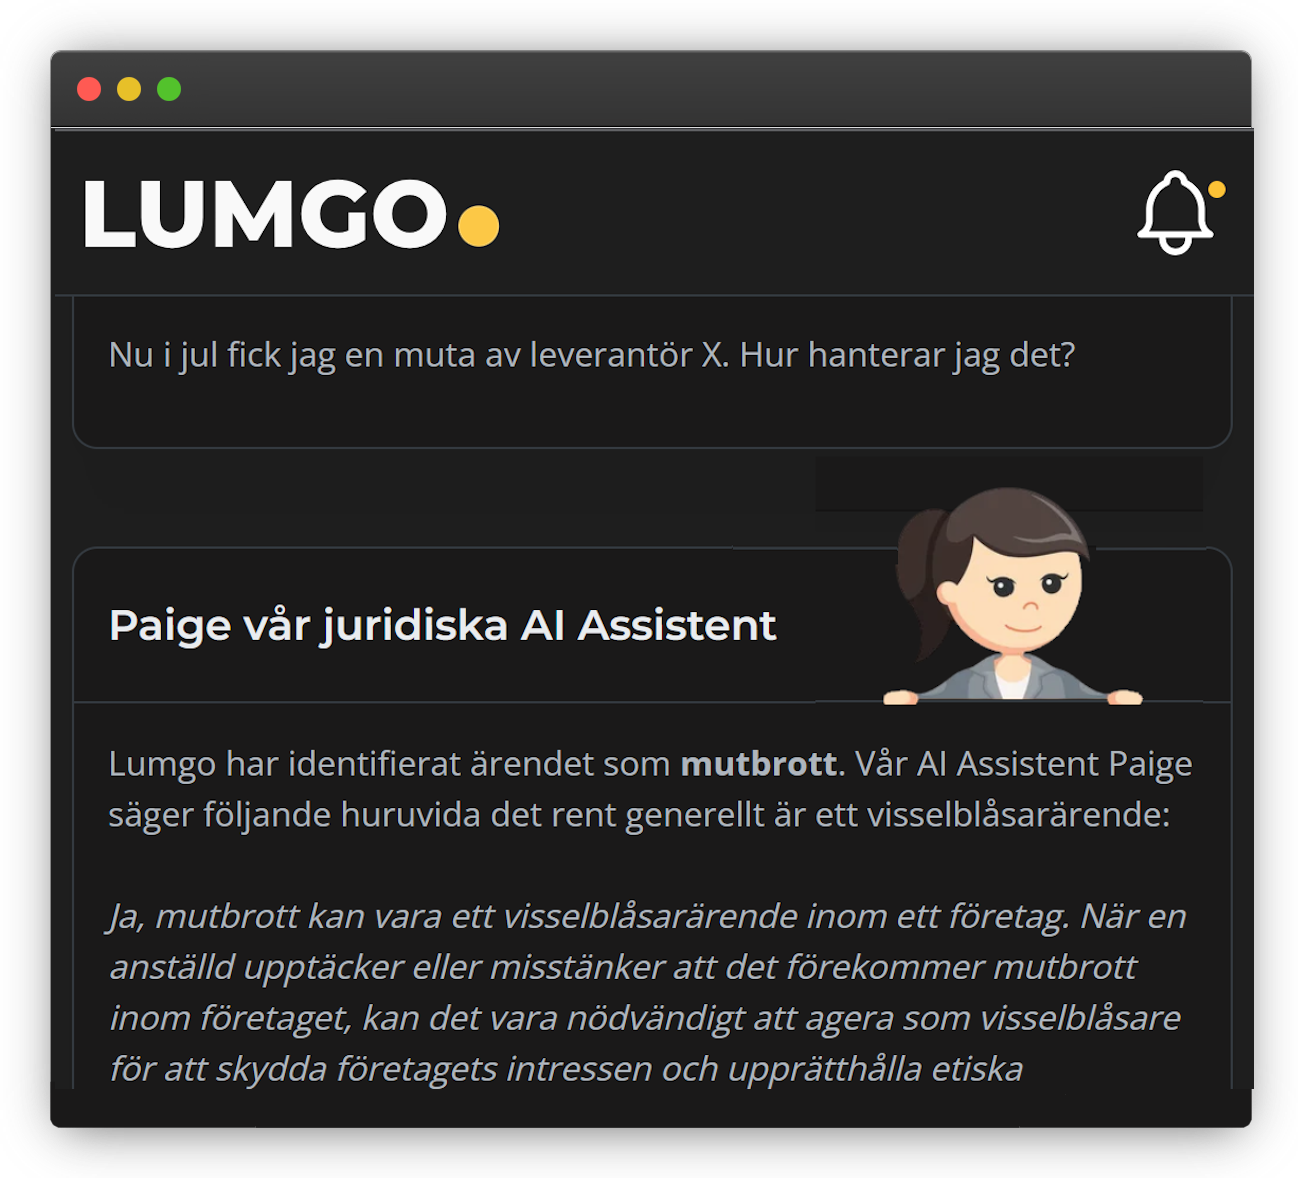 New AI functionality with Lumgo